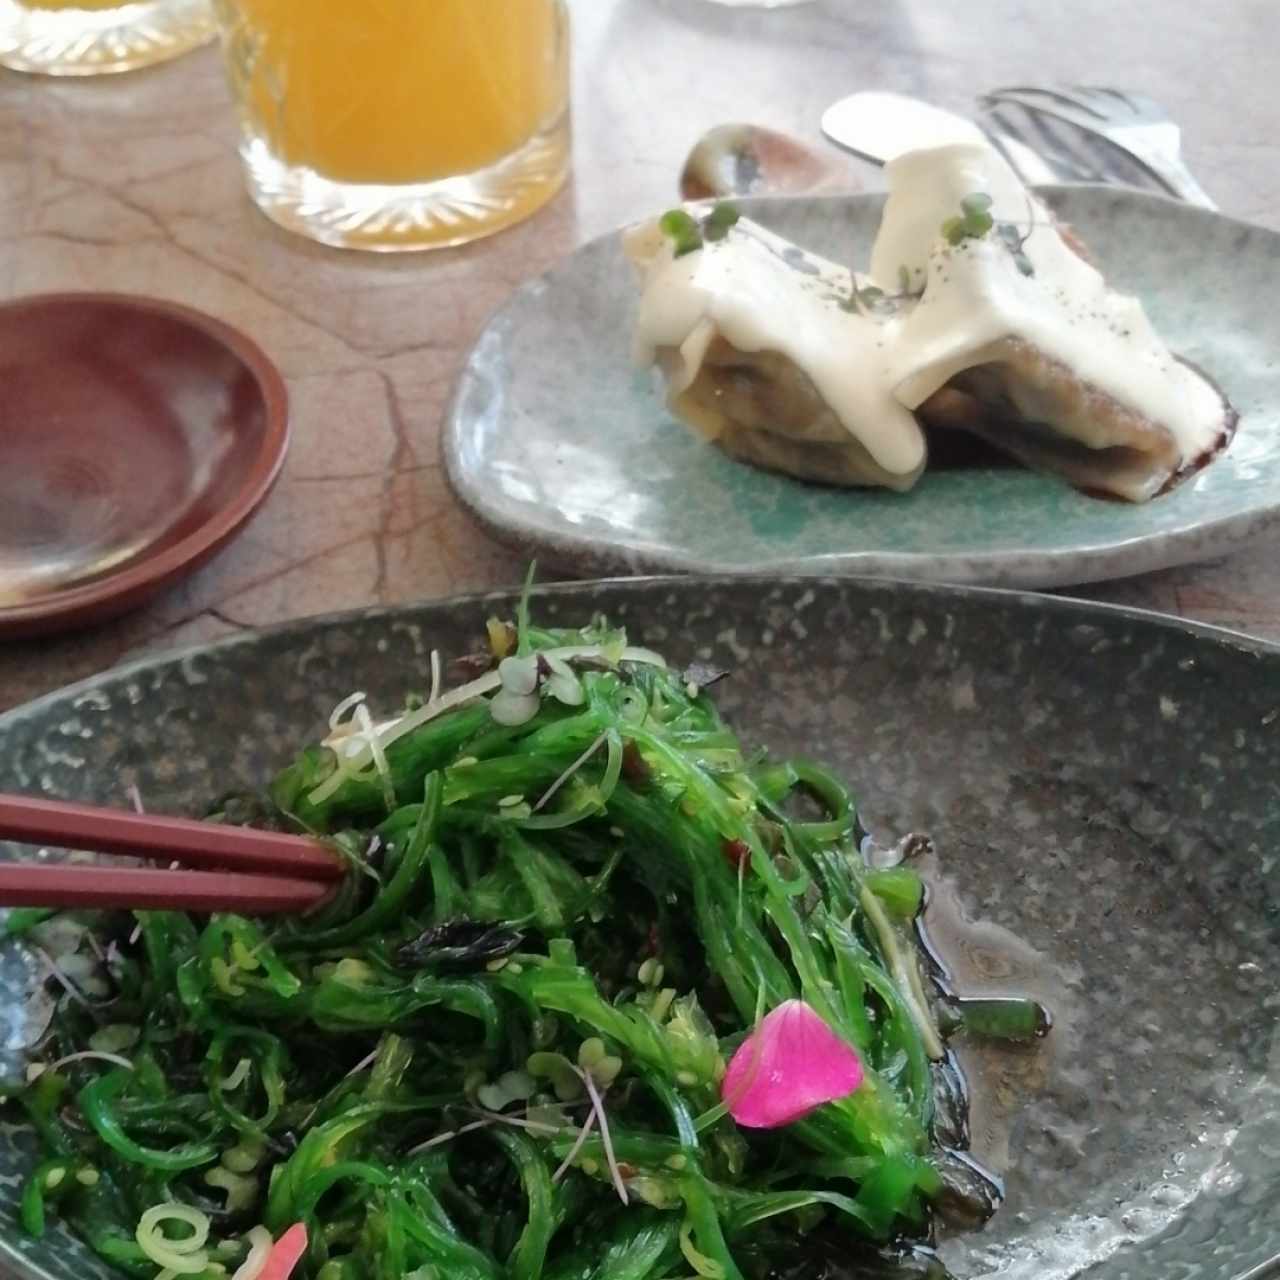 Kuyi kuyi wakame salad y
Dumpling de Hongos